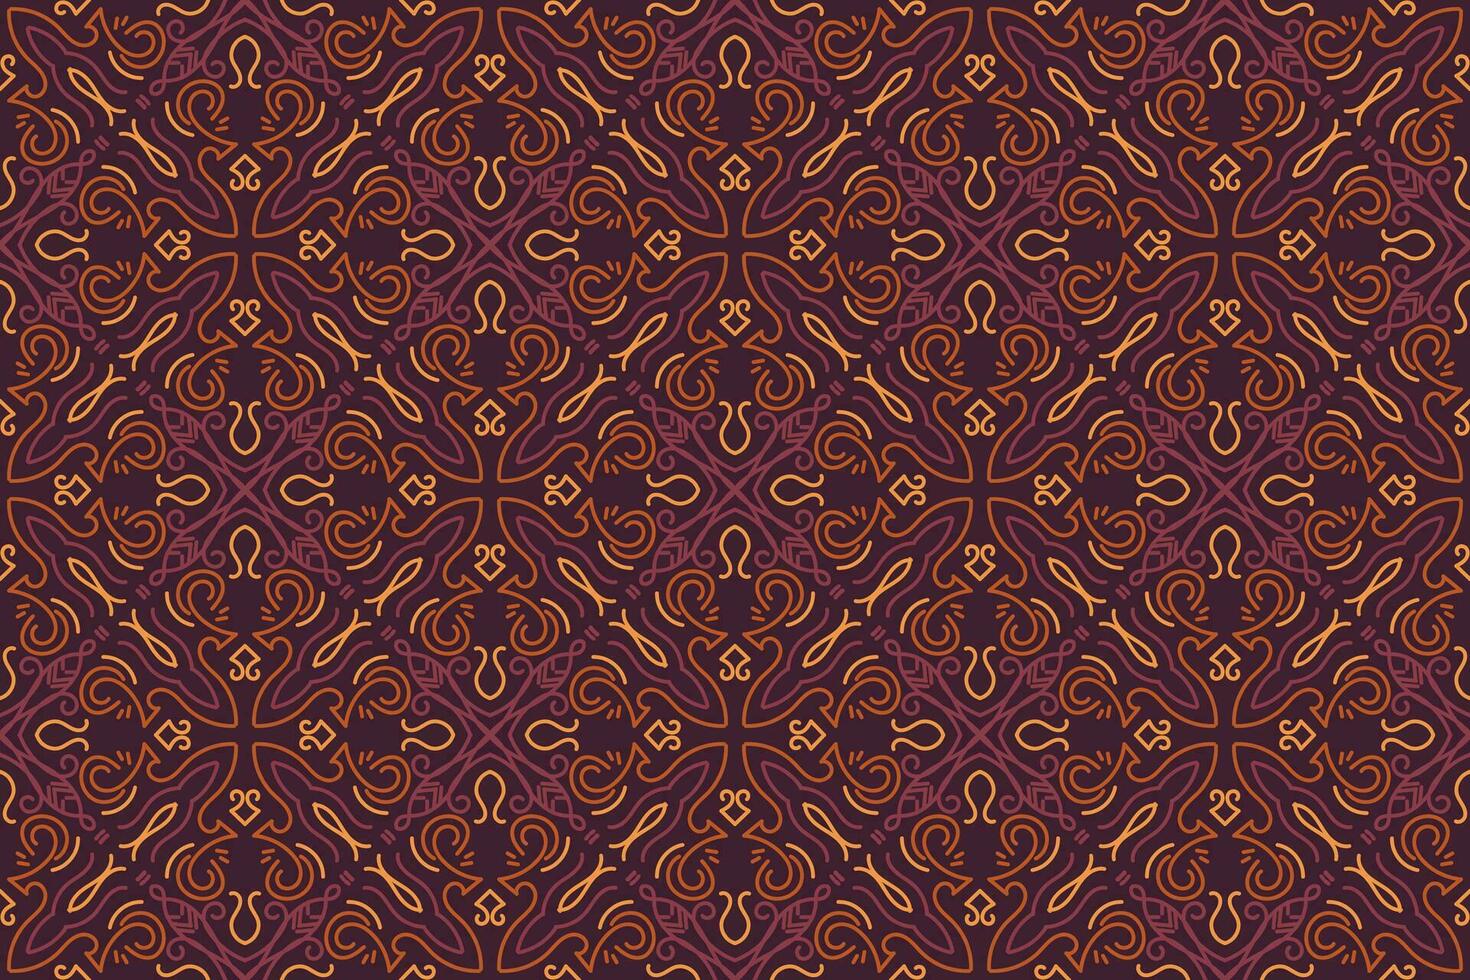 Arabisch patroon. Purper en oranje achtergrond met Arabisch ornamenten. patronen, achtergronden en achtergronden voor uw ontwerp. textiel ornament. vector illustratie.